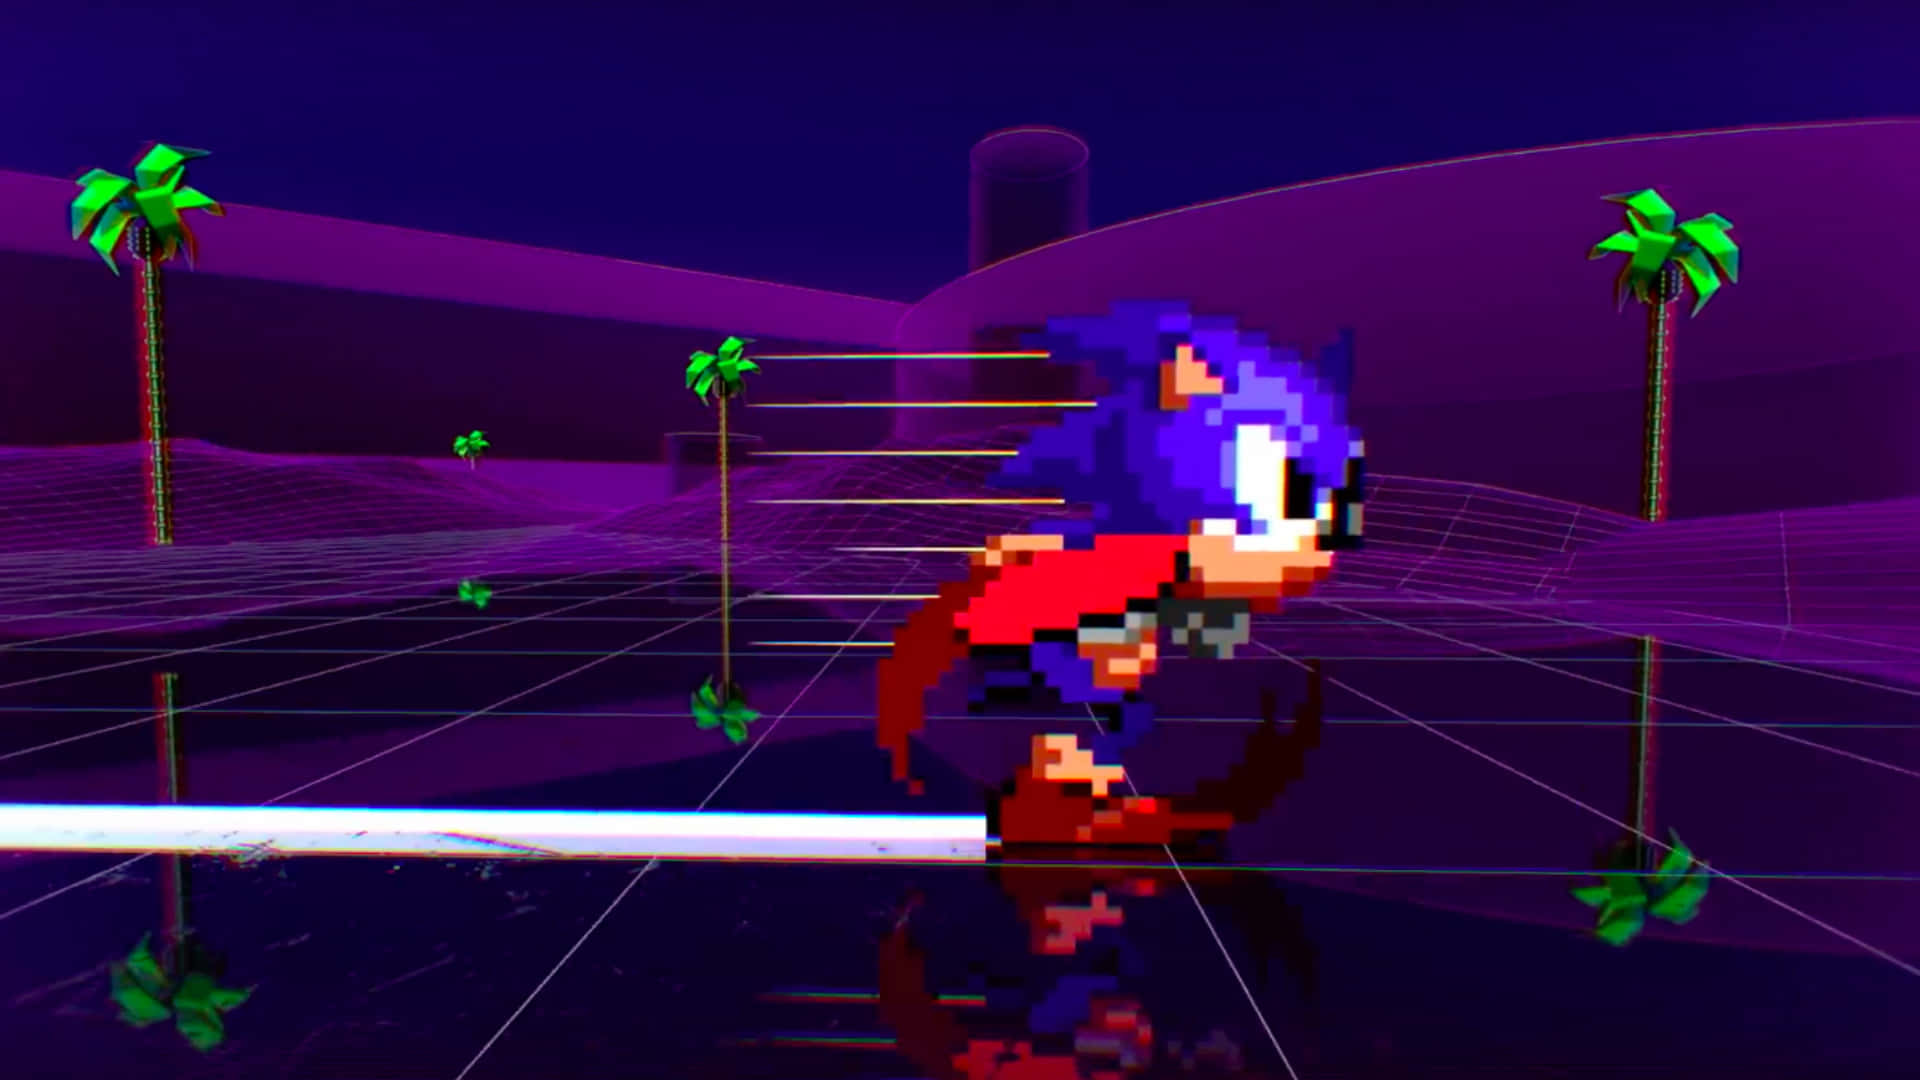 Classic Sonic speeding through a colorful world Wallpaper